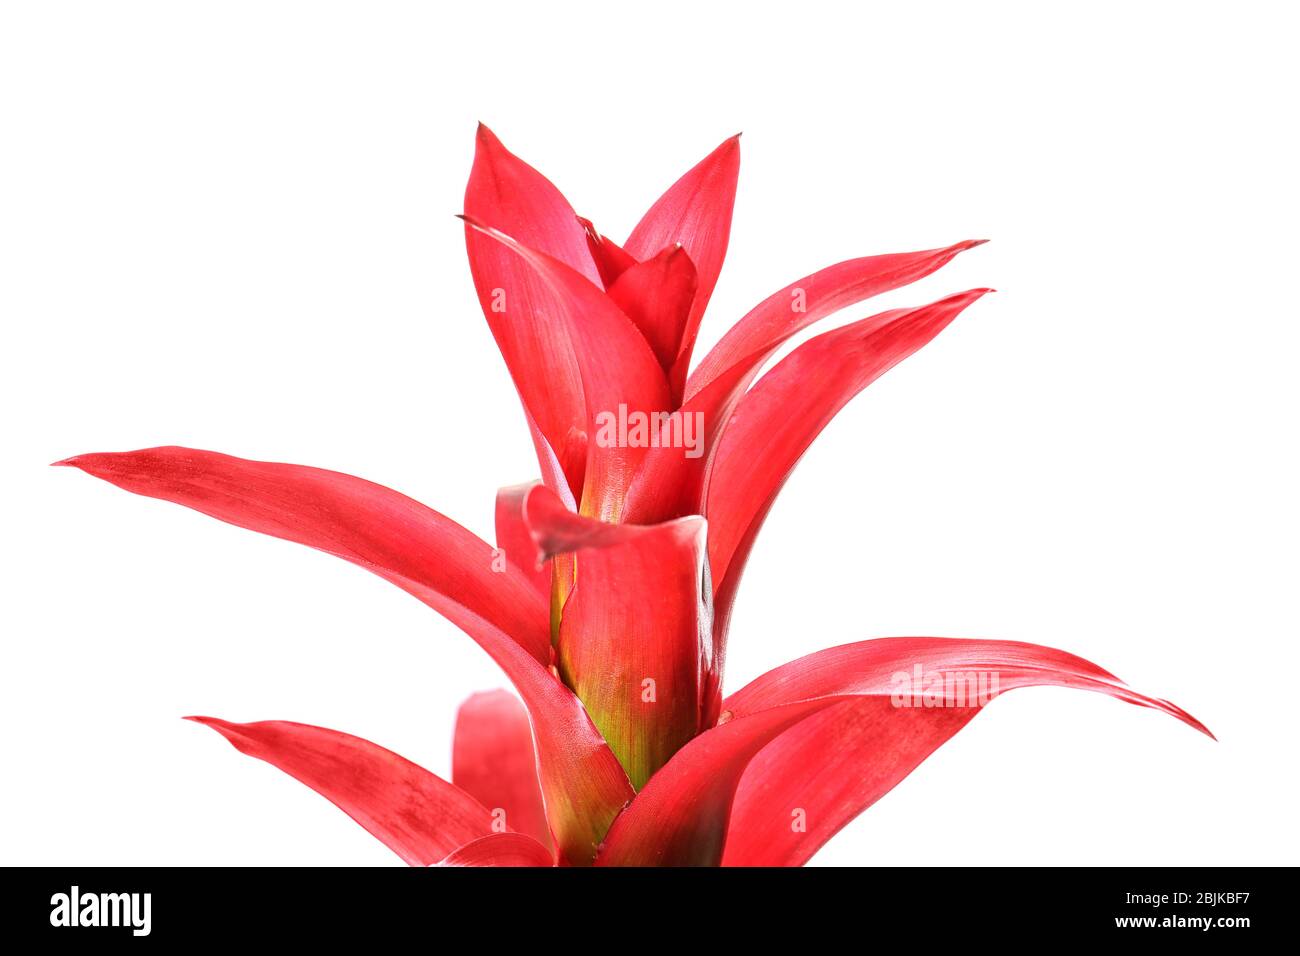 Red Guzmania flower on white background Stock Photo